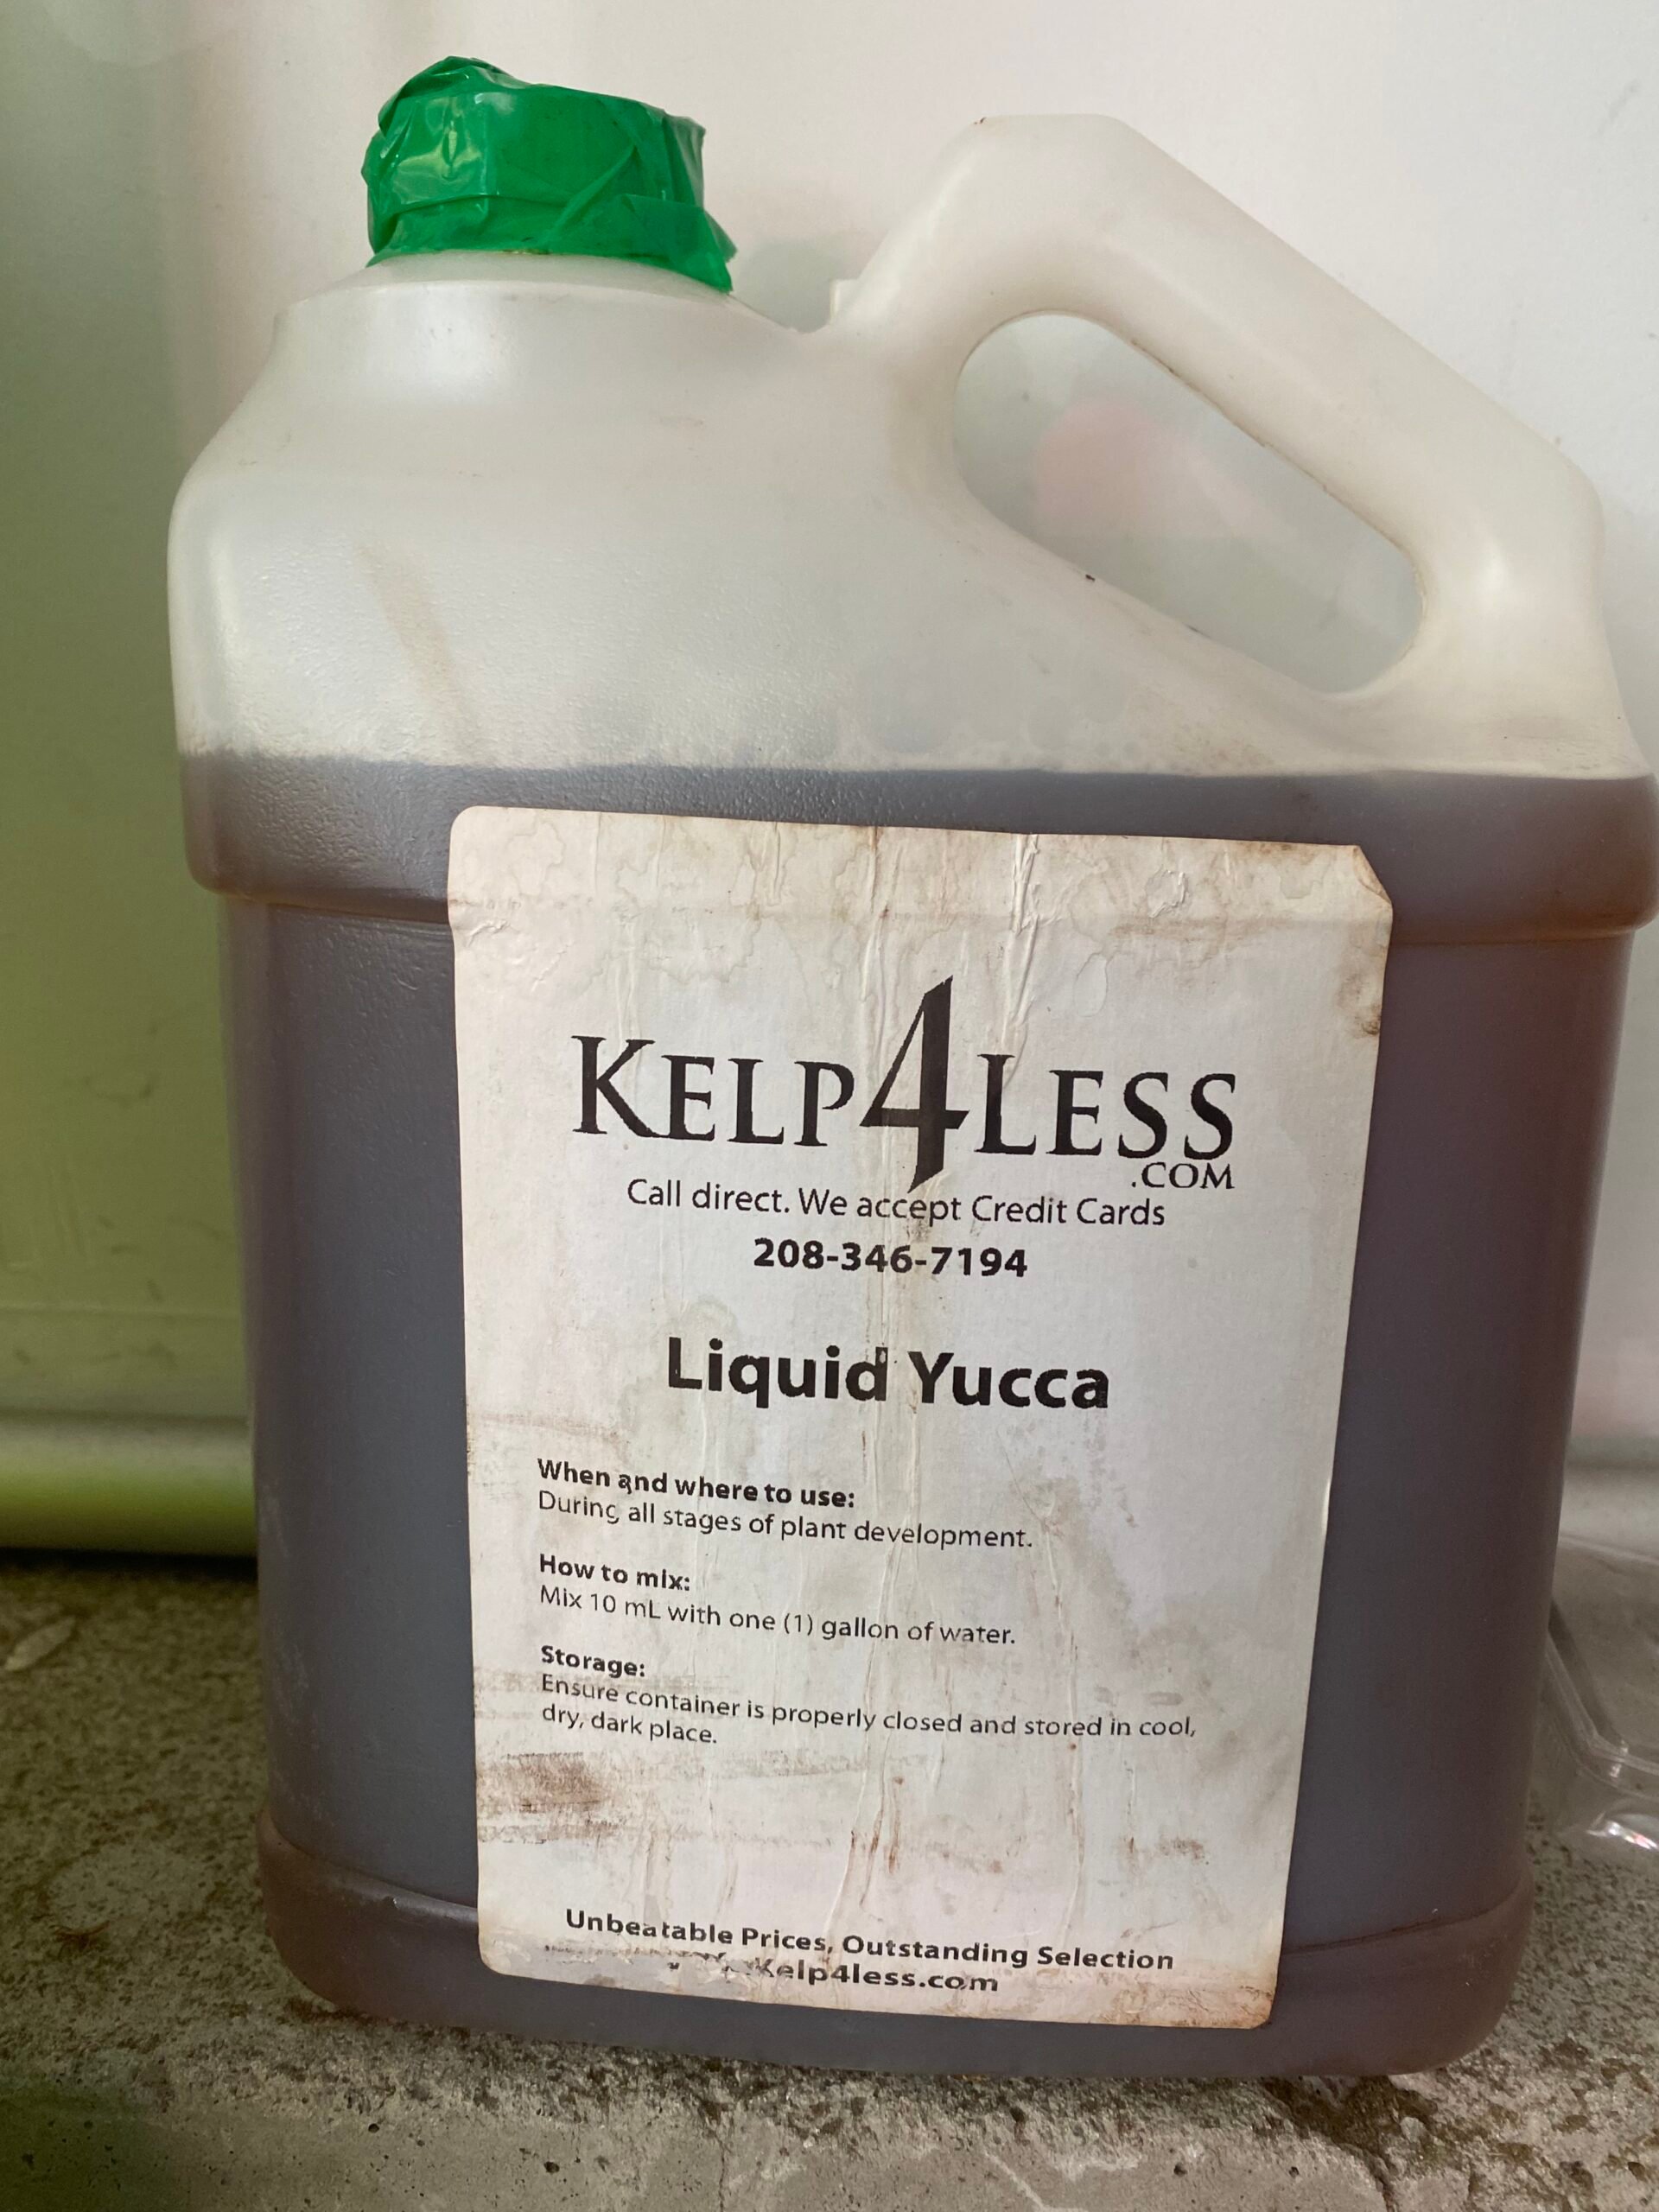 Liquid yucca extract